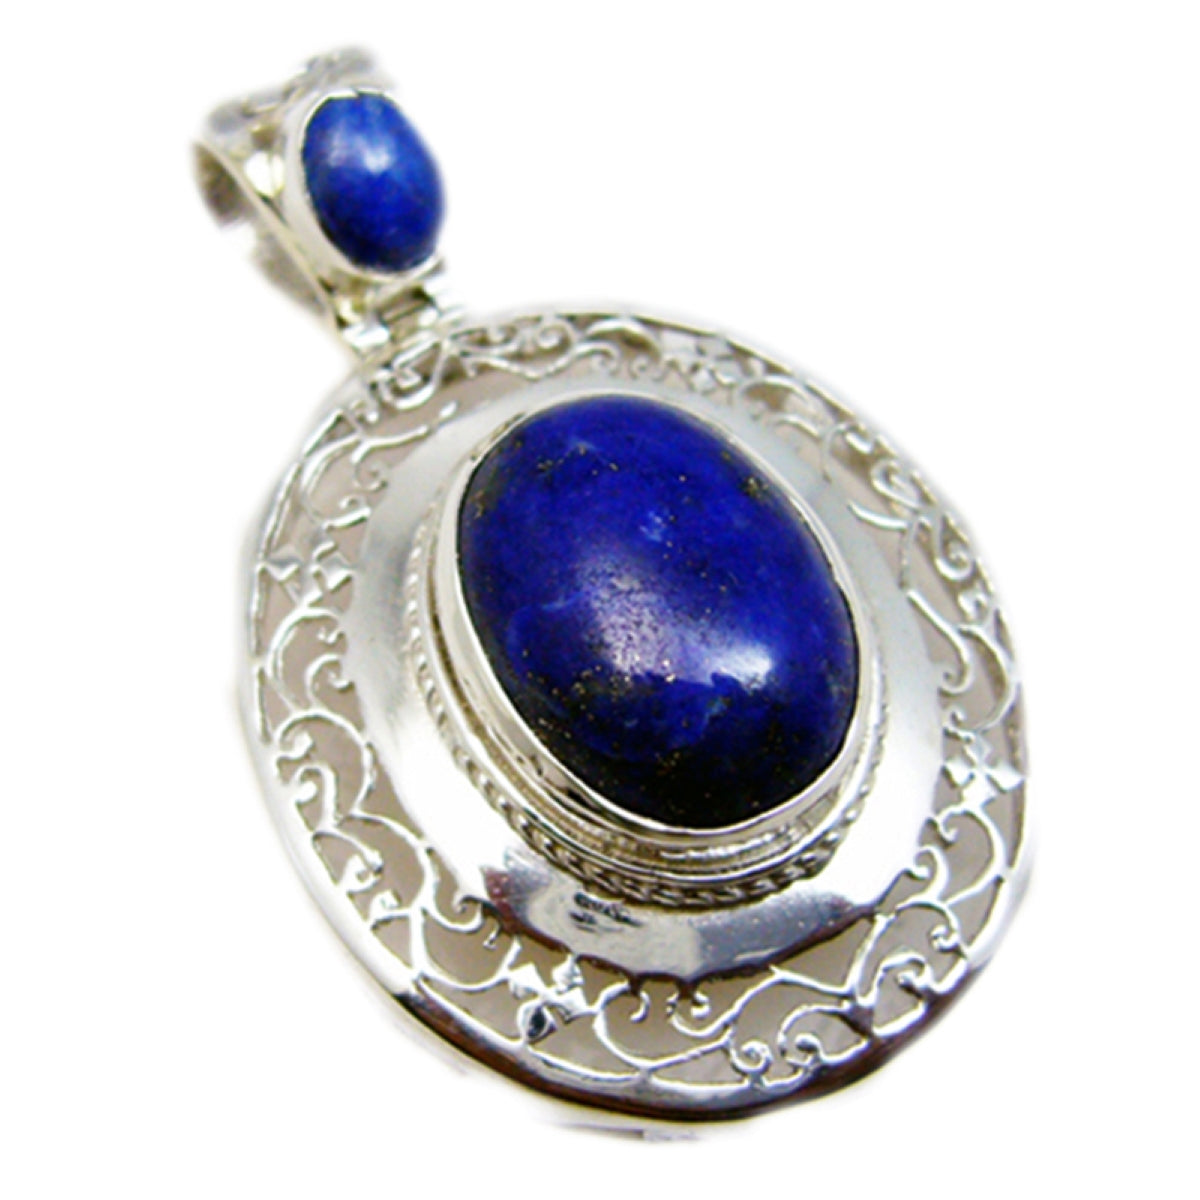 Riyo Genuine Gems Oval Cabochon Nevy Blue Lapis Lazuli 925 Sterling Silver Pendant gift for mom birthday